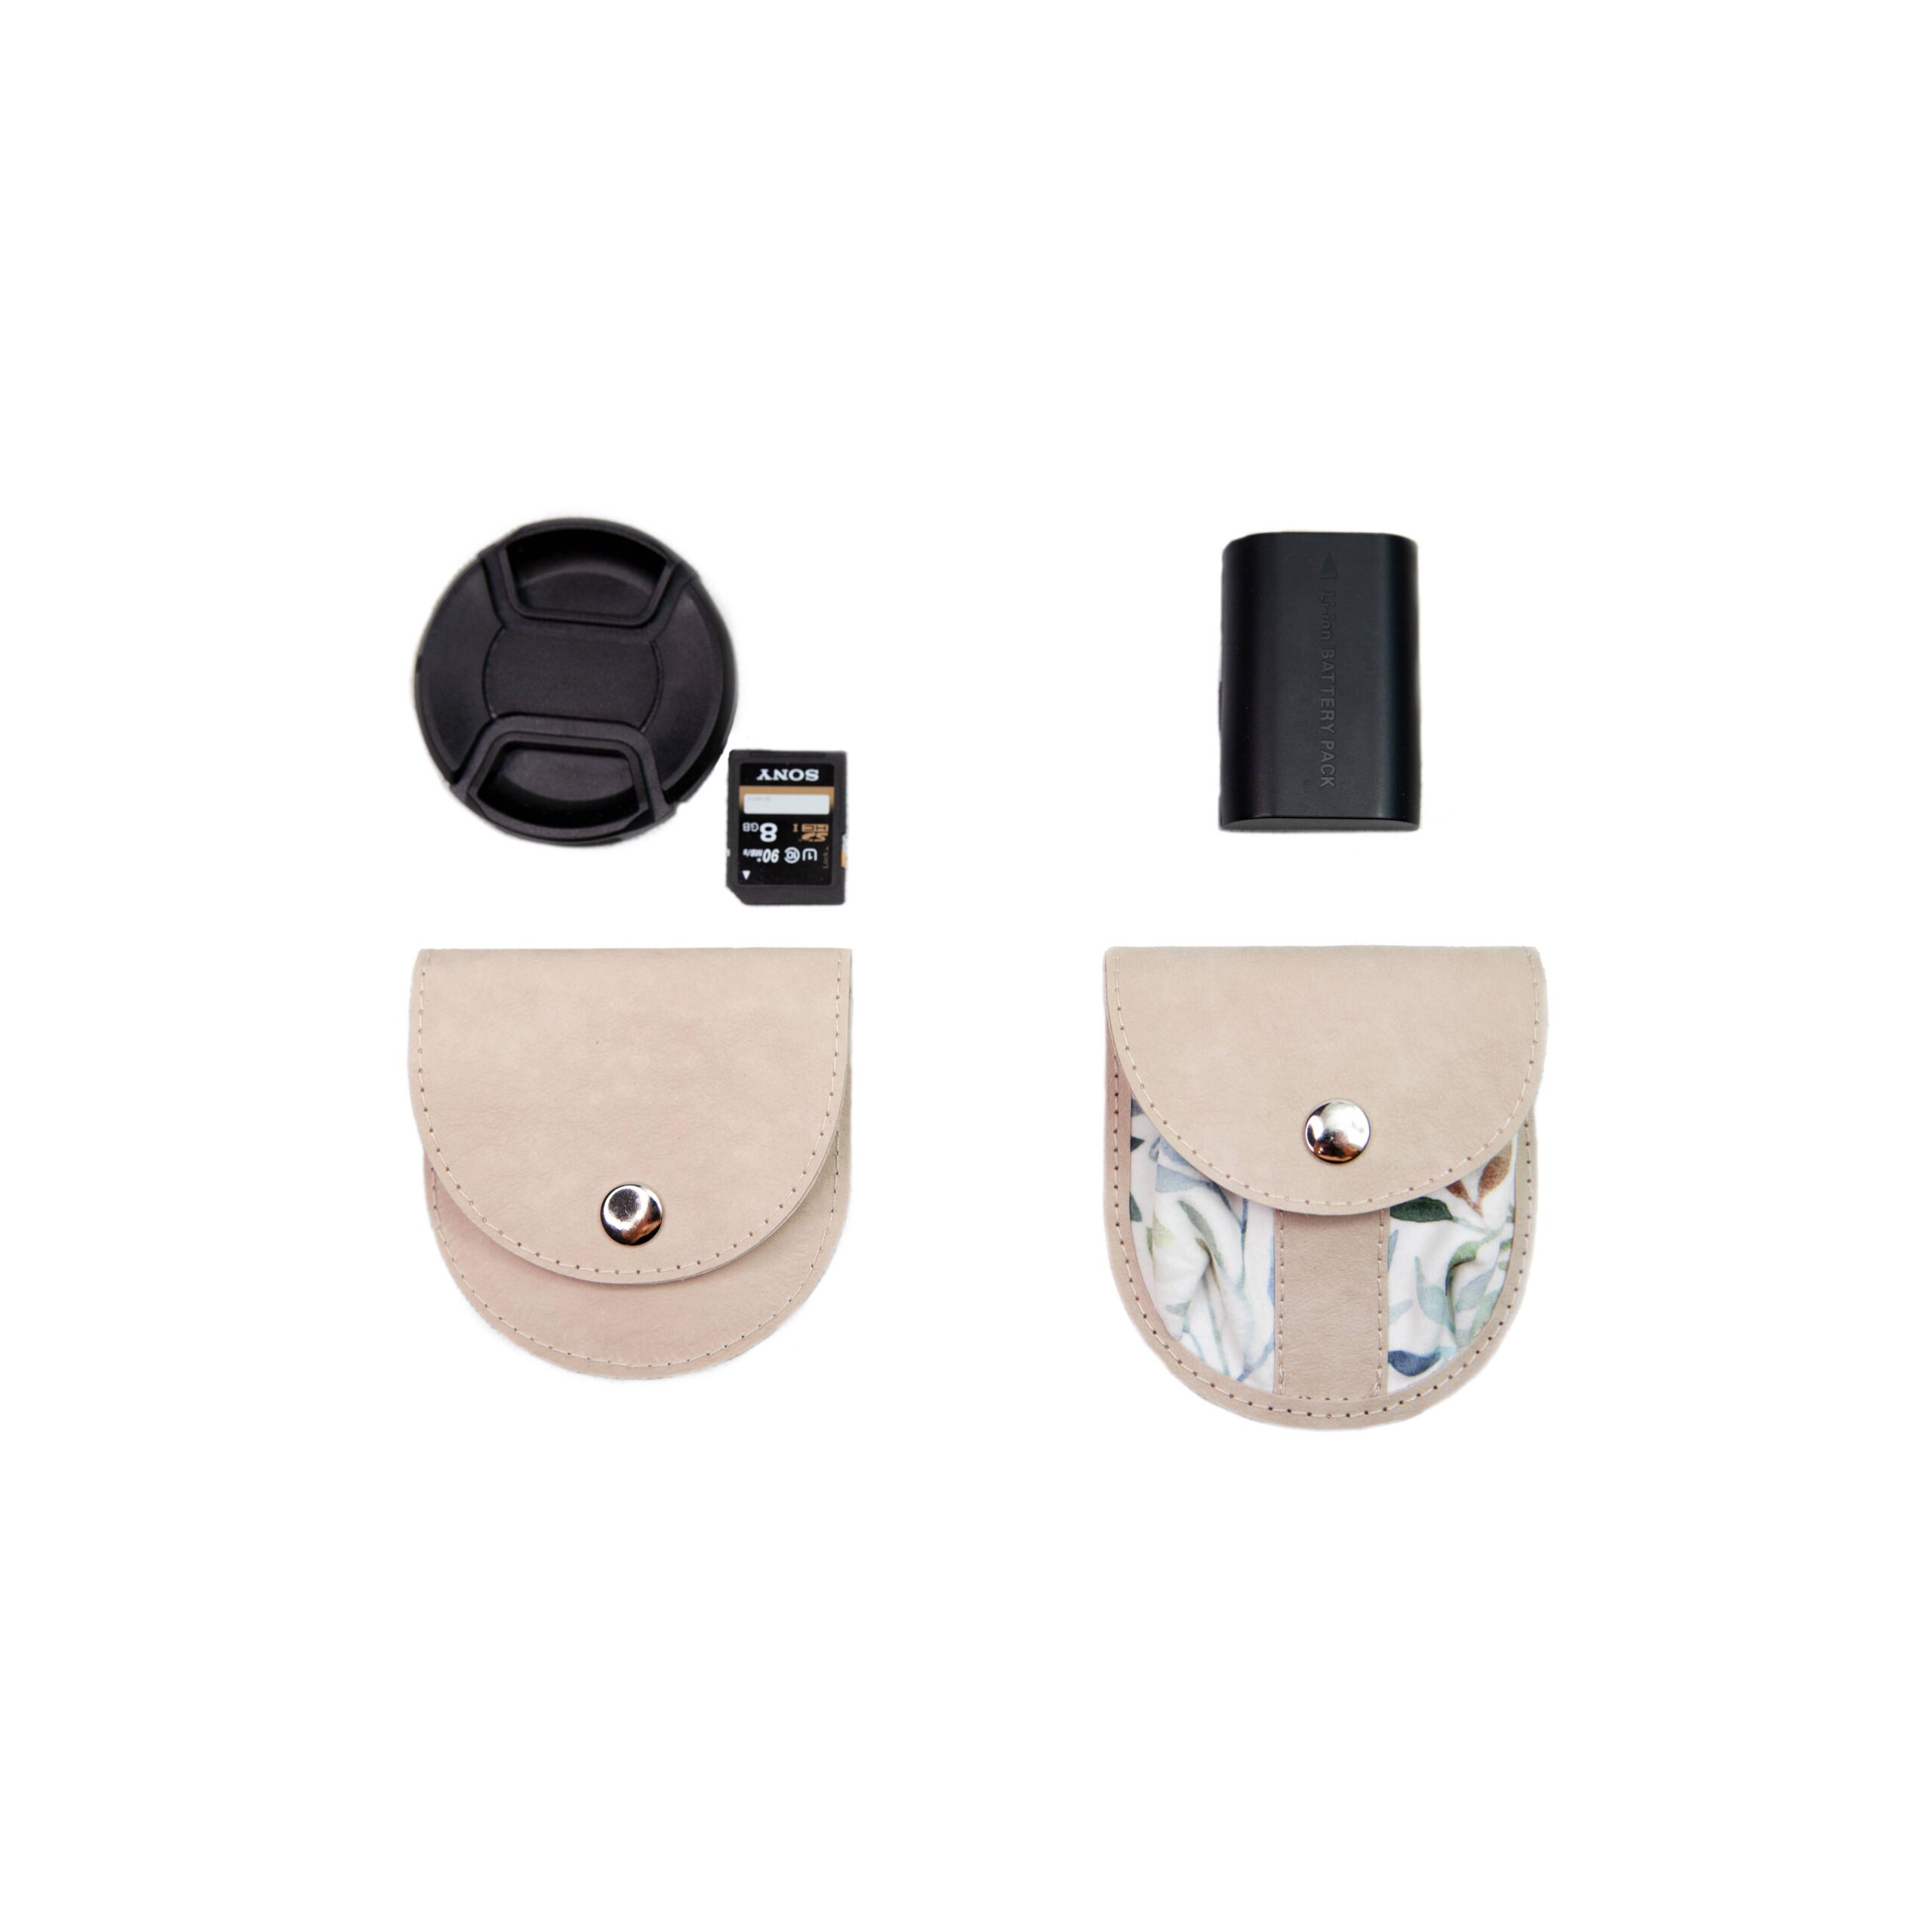 lens cap holder and battery pocket